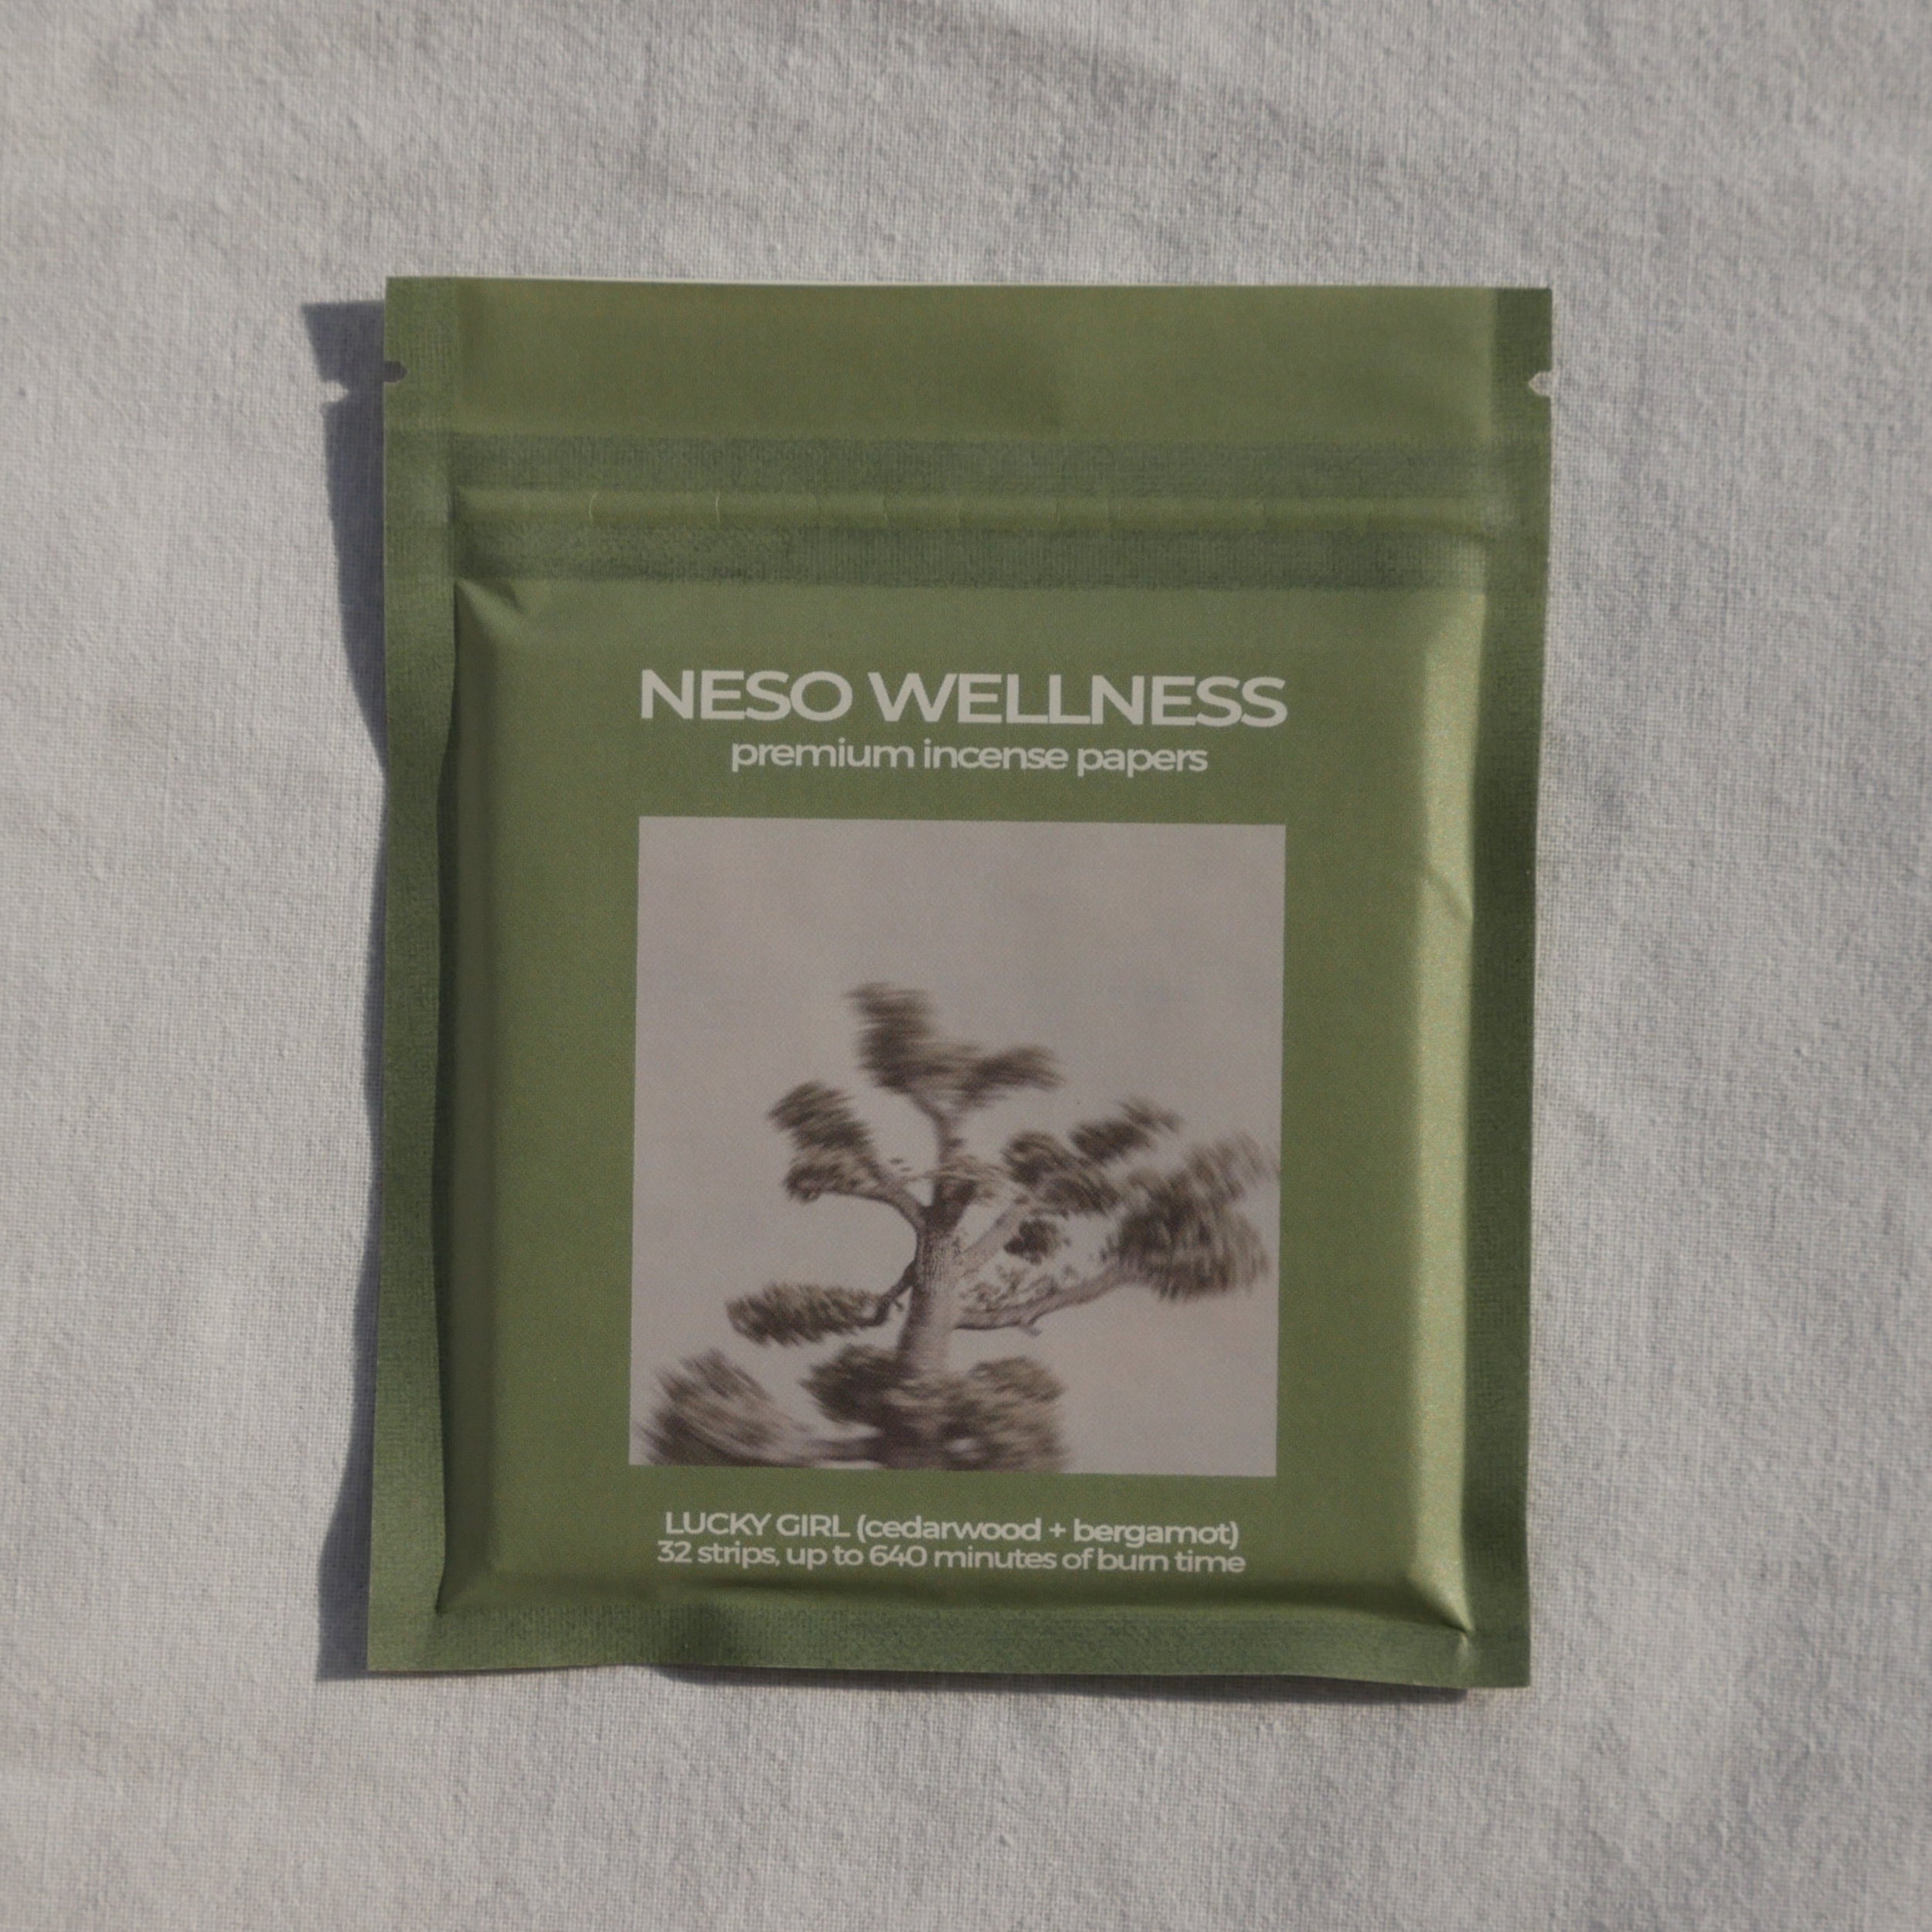 neso wellness